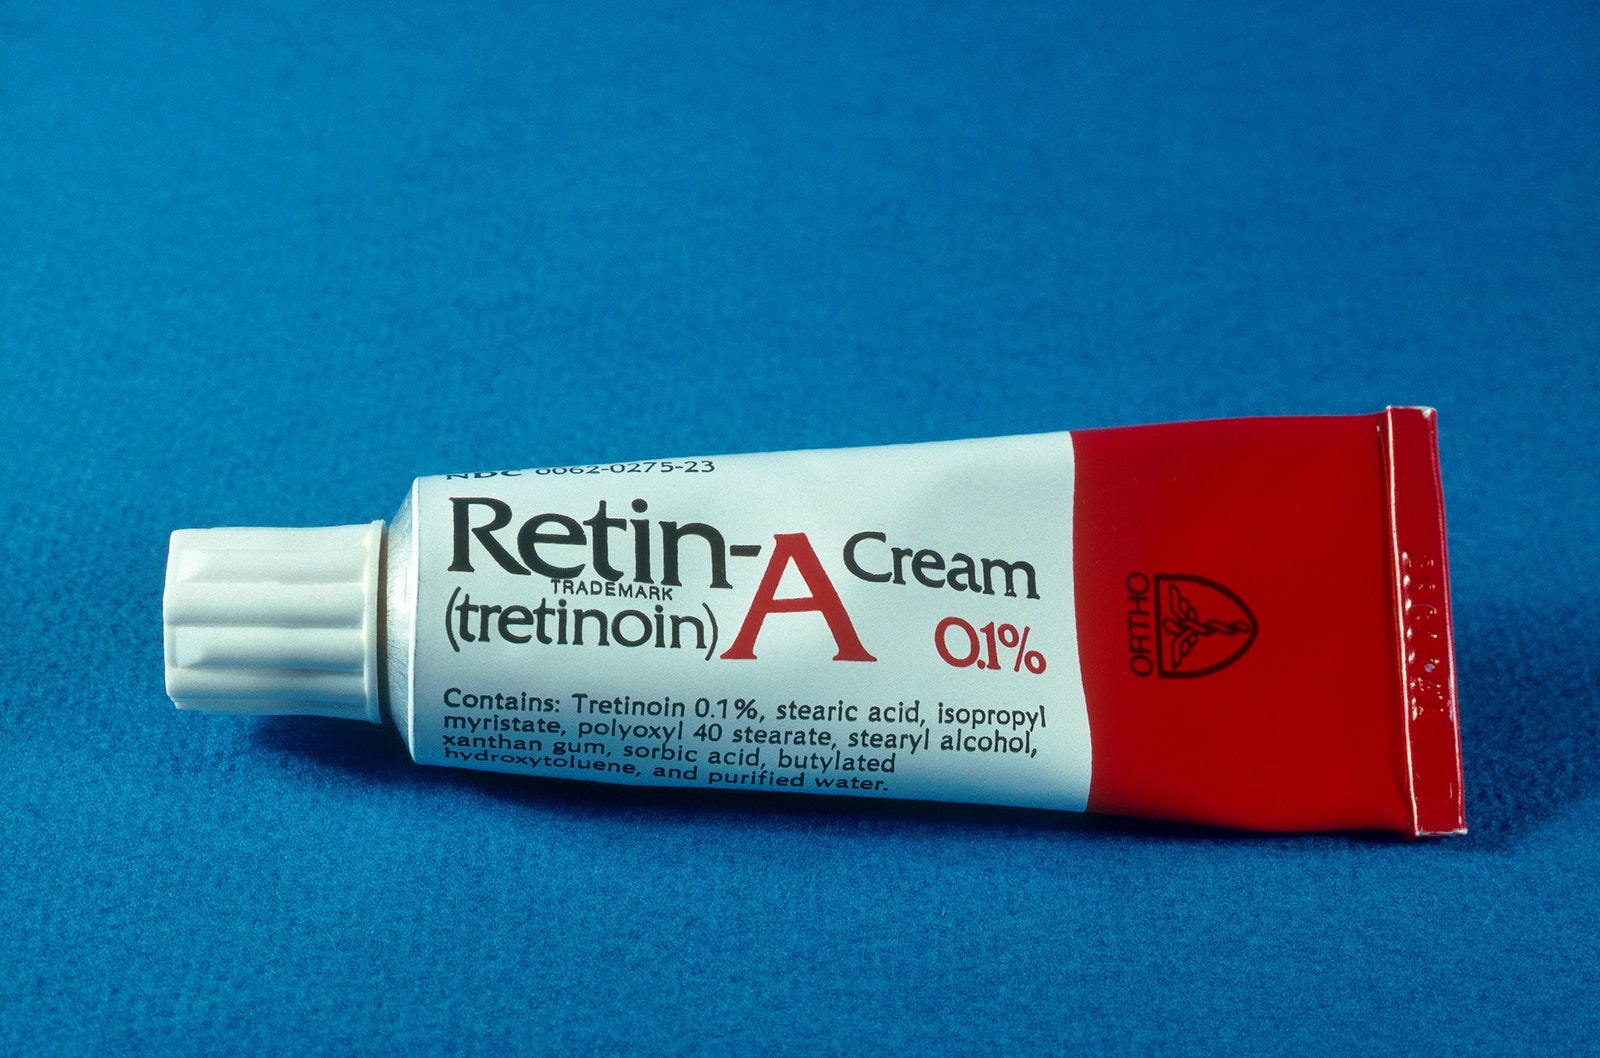 A closeup image of a tube of prescription acne medication RetinA